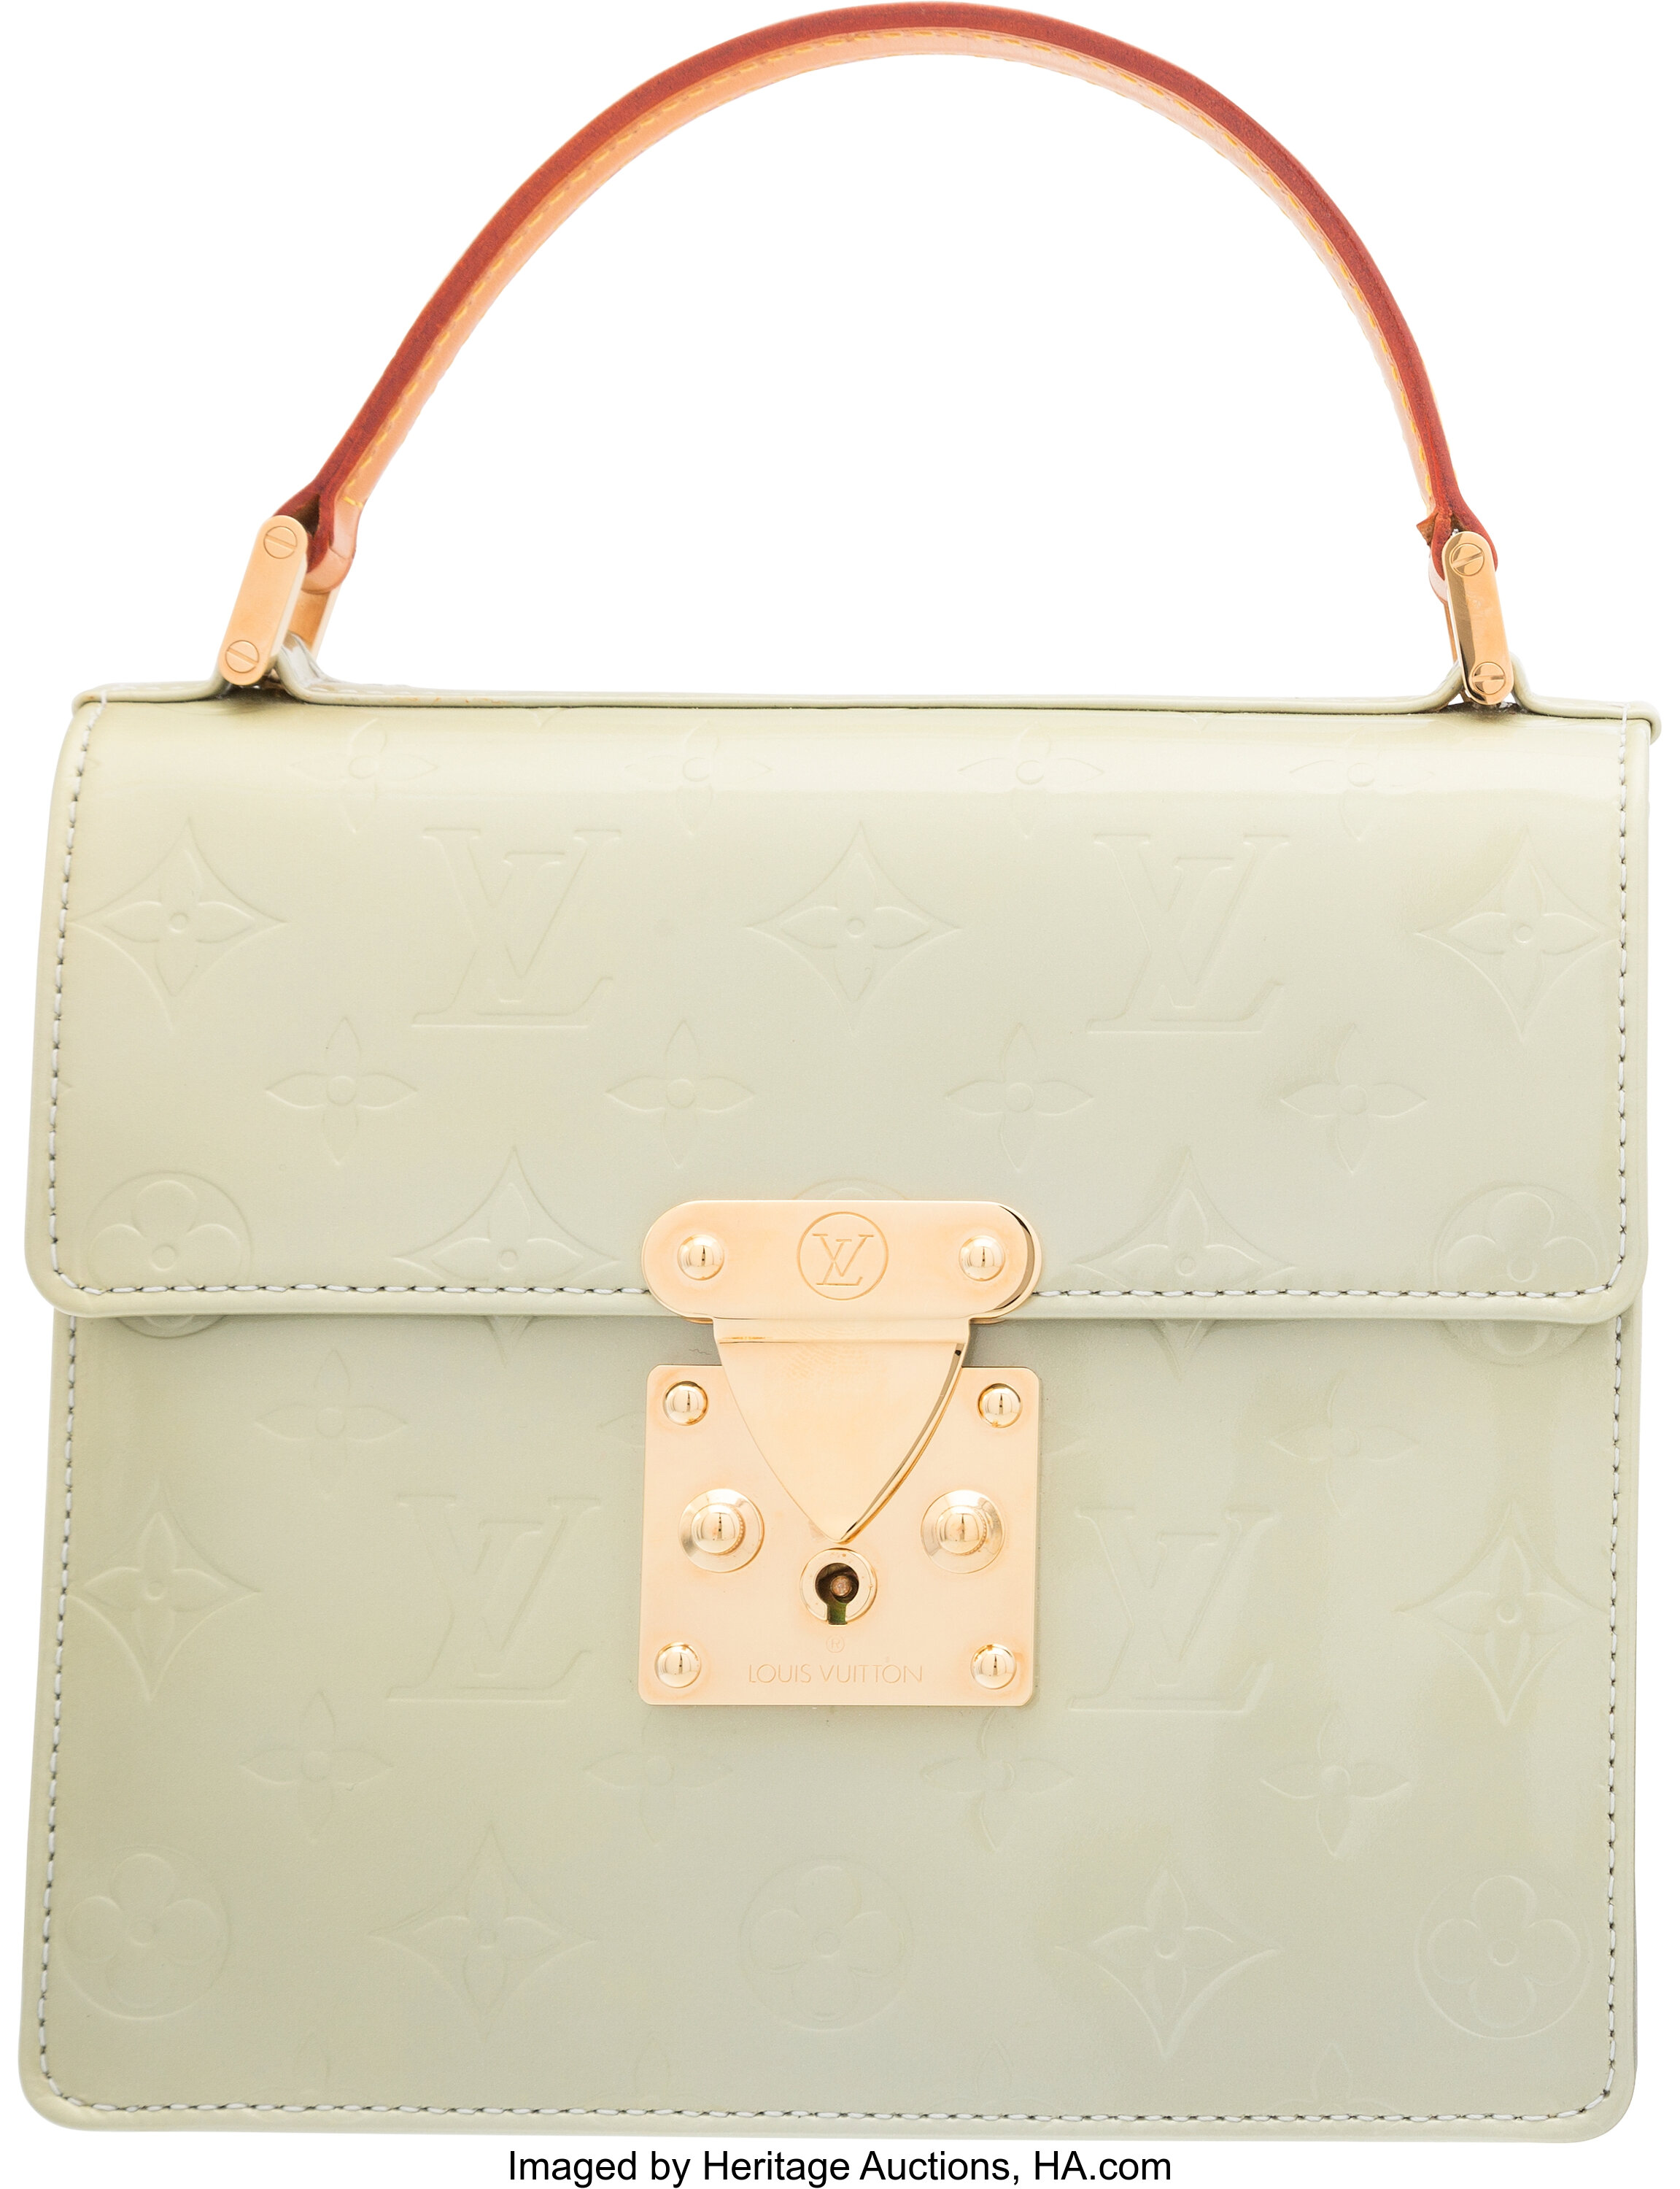 Sold at Auction: Louis Vuitton Mint Green Monogram Vernis Leather Alma BB  Bag